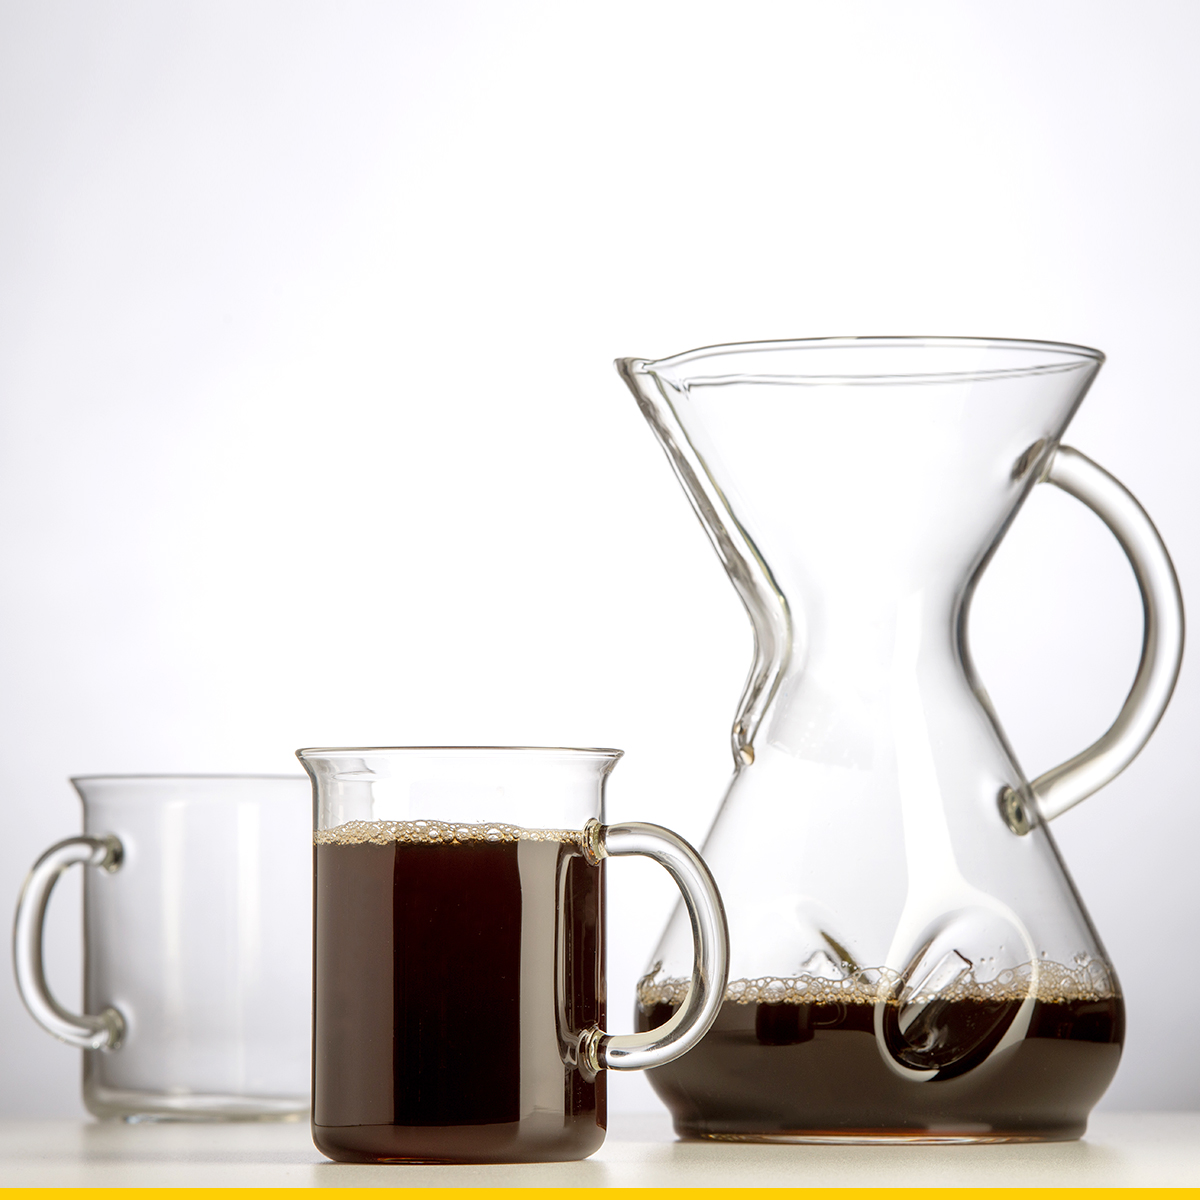 https://store.chemexcoffeemaker.com/media/catalog/product/c/h/chemex-glass-murray-mug-setup.jpg